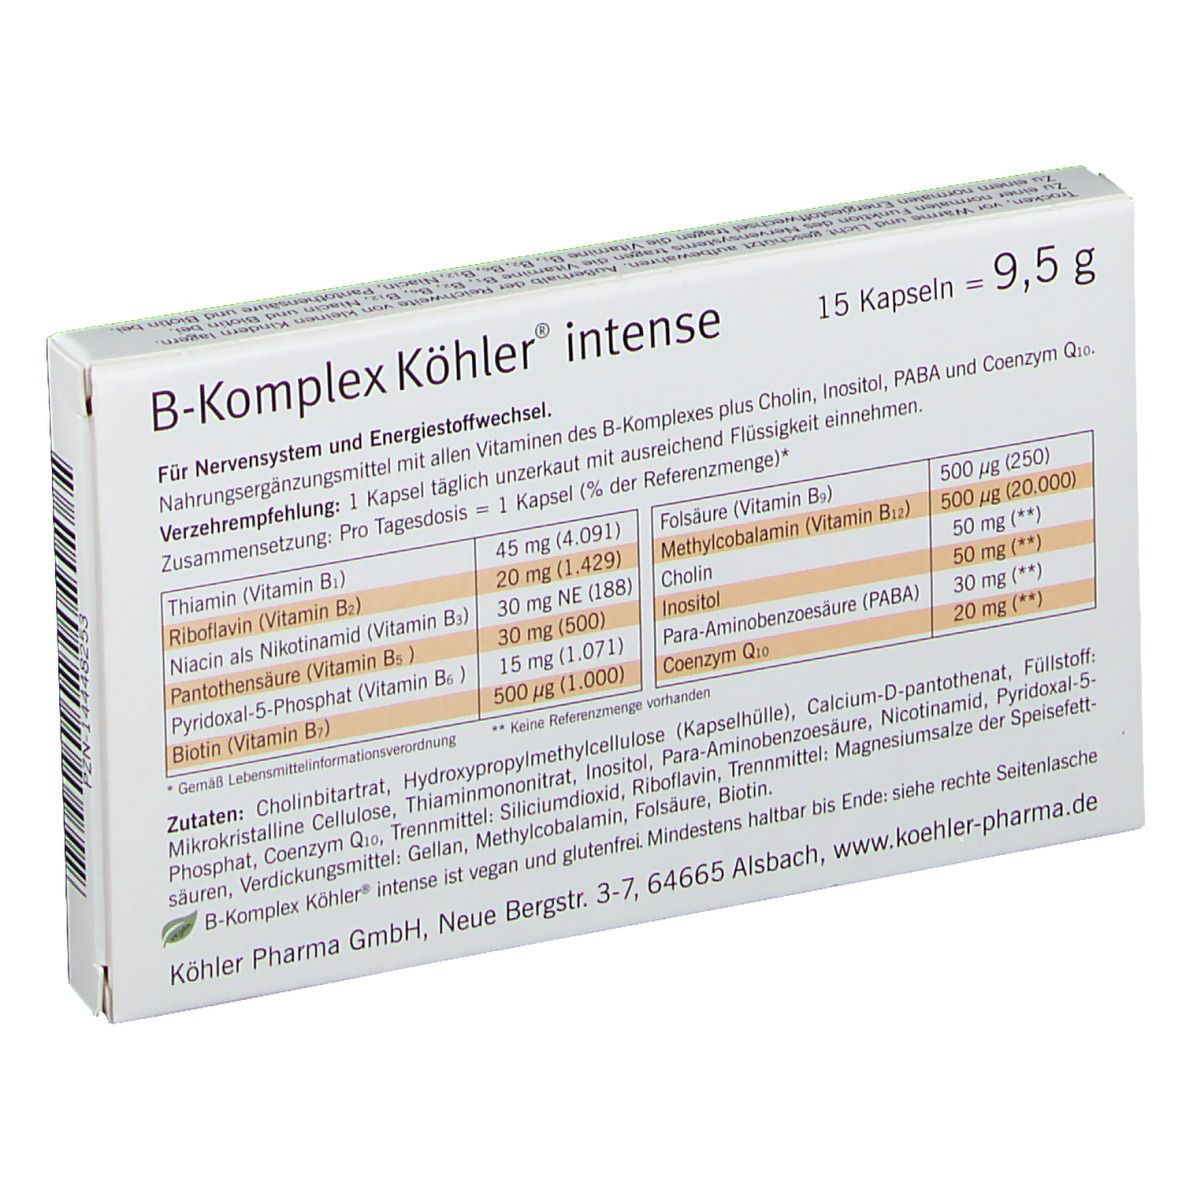 B-Komplex Köhler® intense